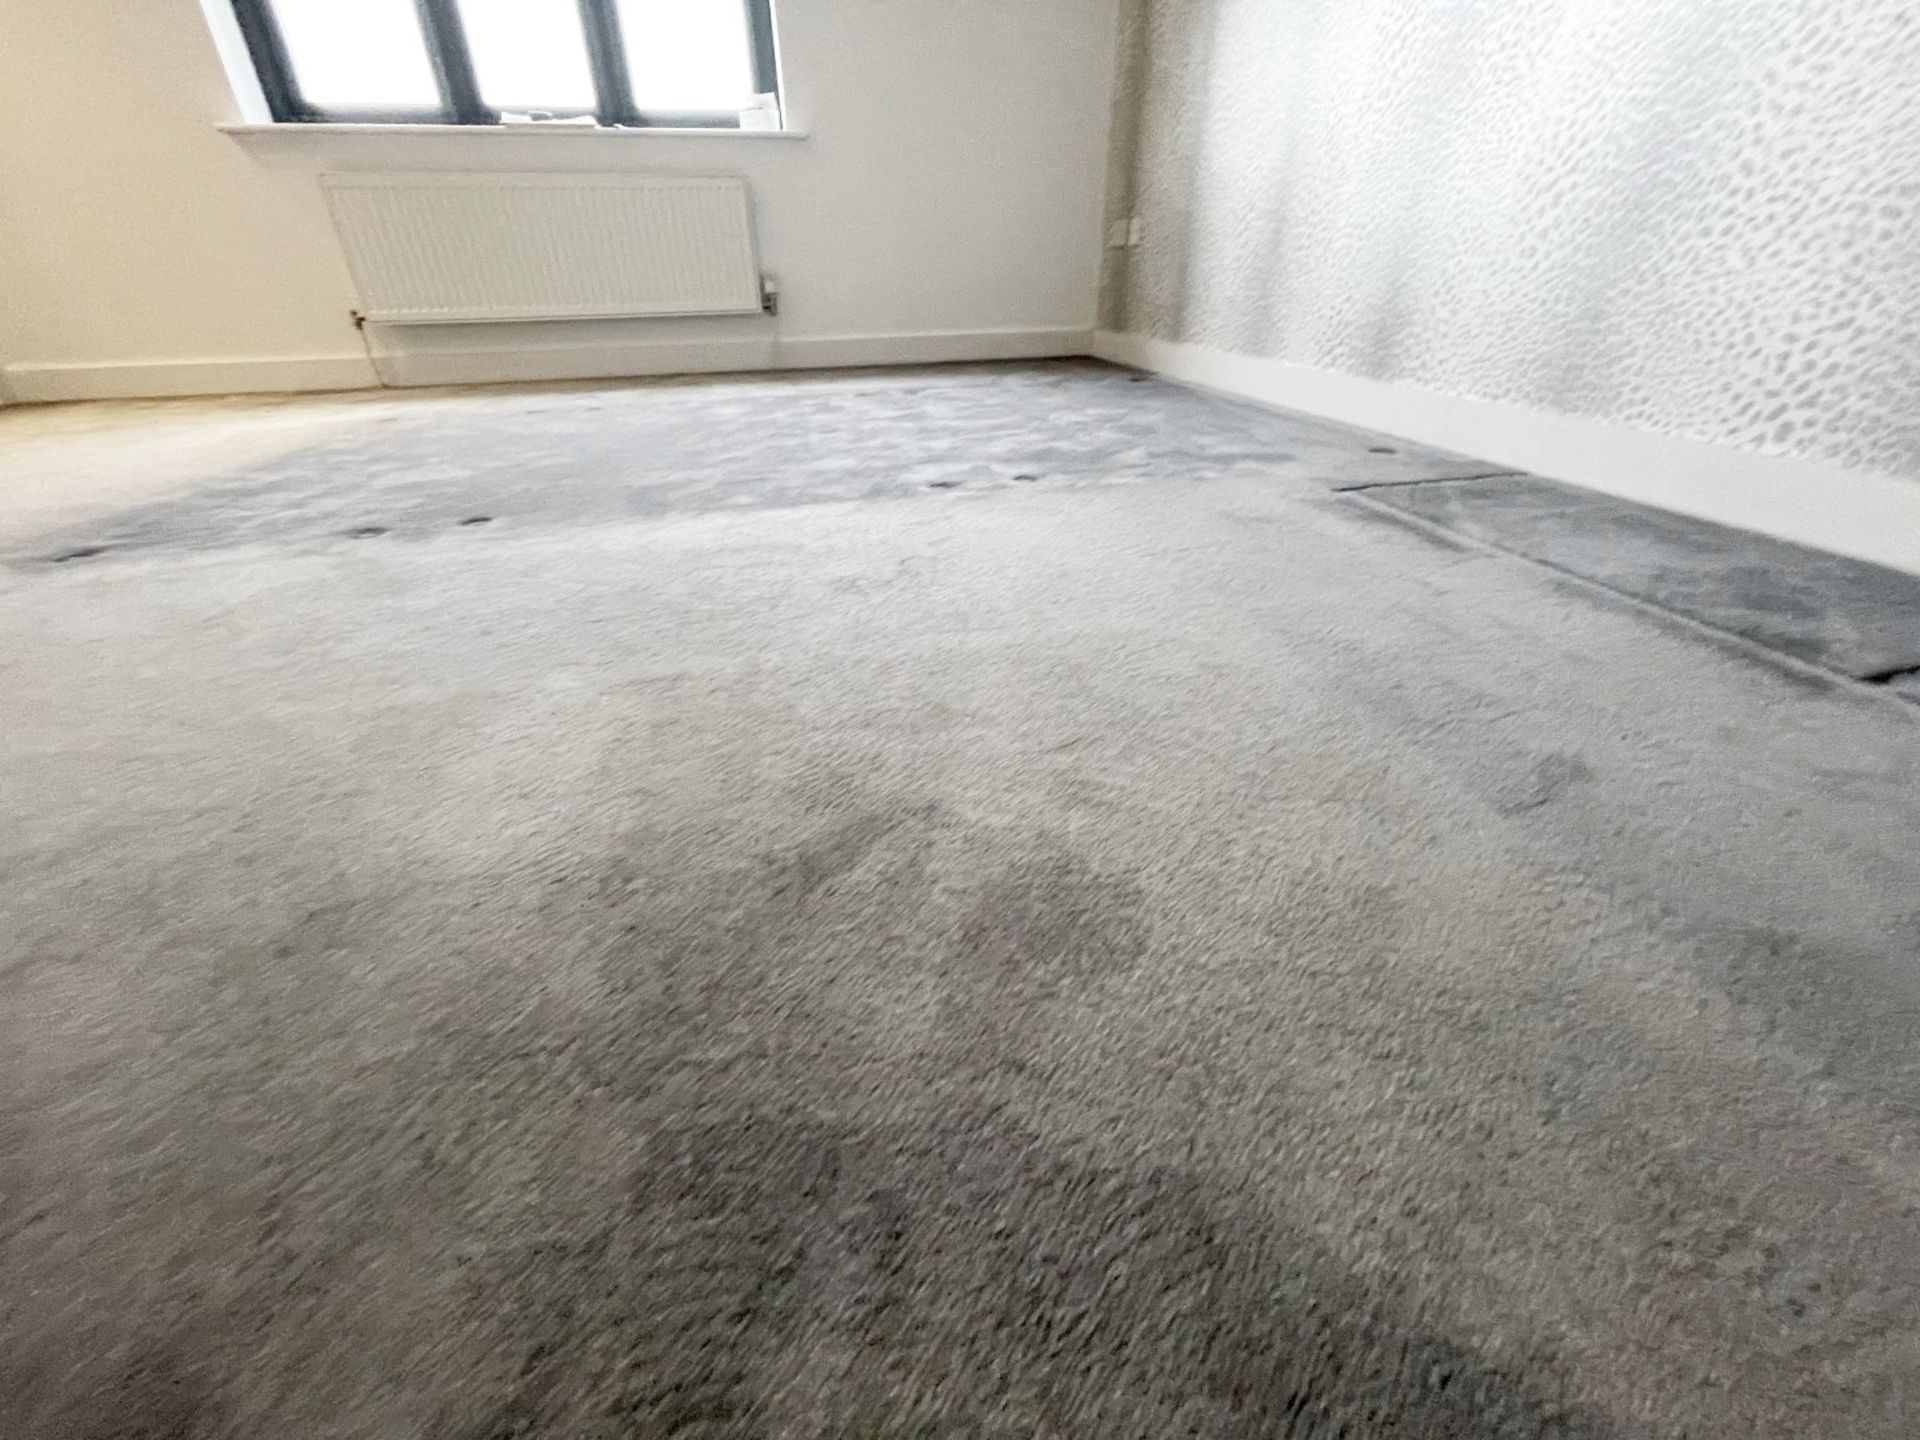 1 x Premium Fitted Bedroom Carpet In Grey (3.9 x 4m) - Ref: REAR-BD/1stFLR - CL742 - Image 2 of 7